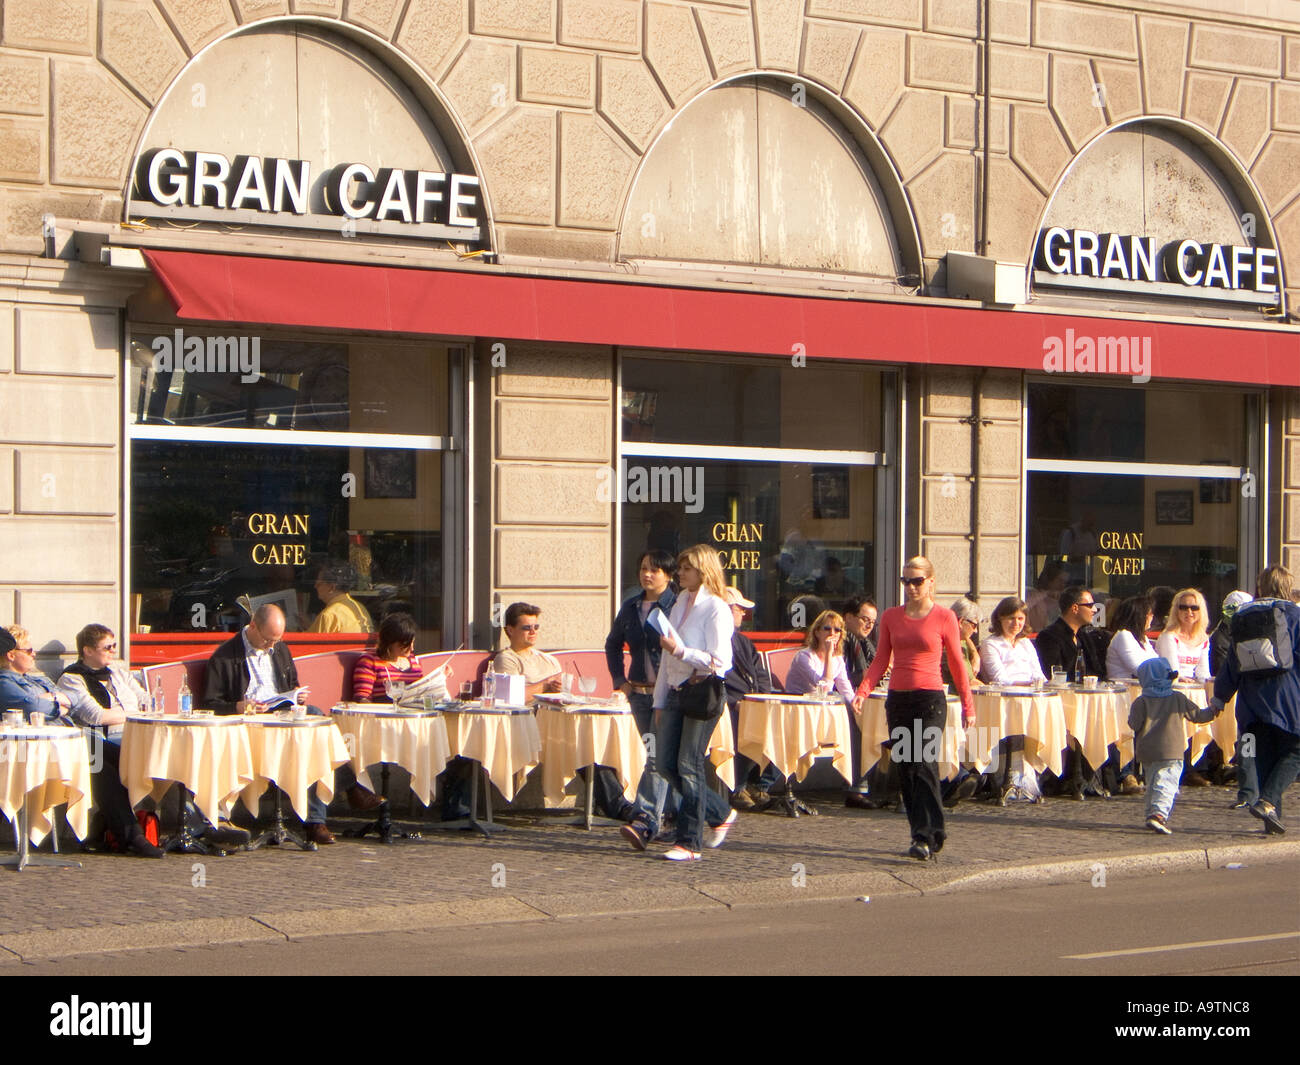 Switzerland Zurich Limmatquai Gran Cafe people Stock Photo